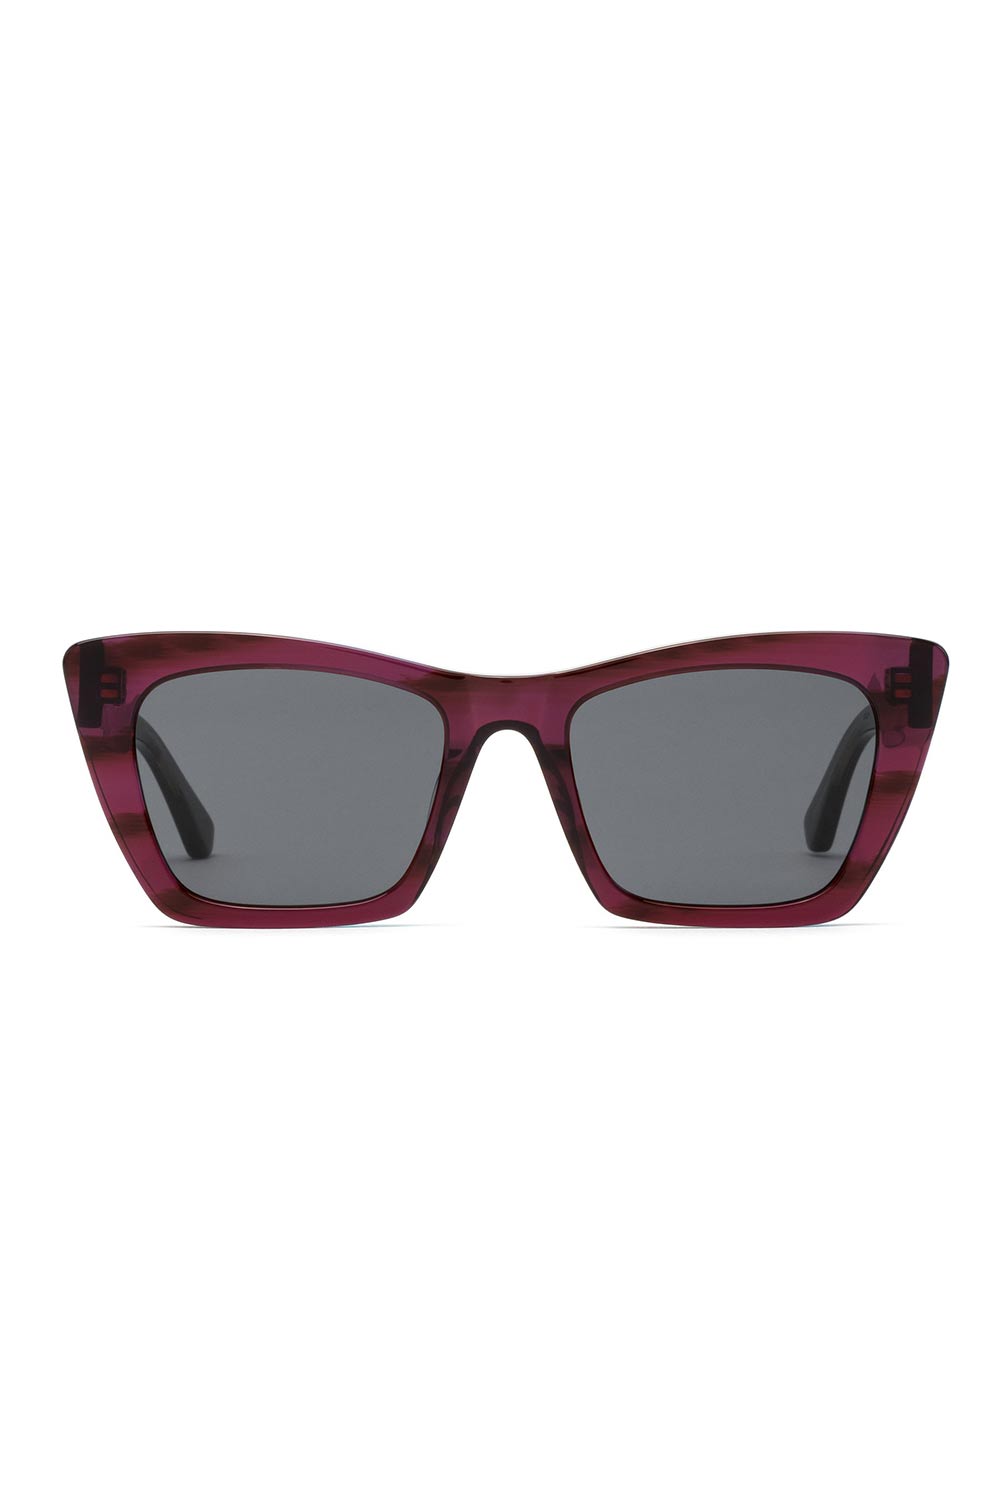 Shop OTIS eyewear | OTIS Vixen Sunglasses